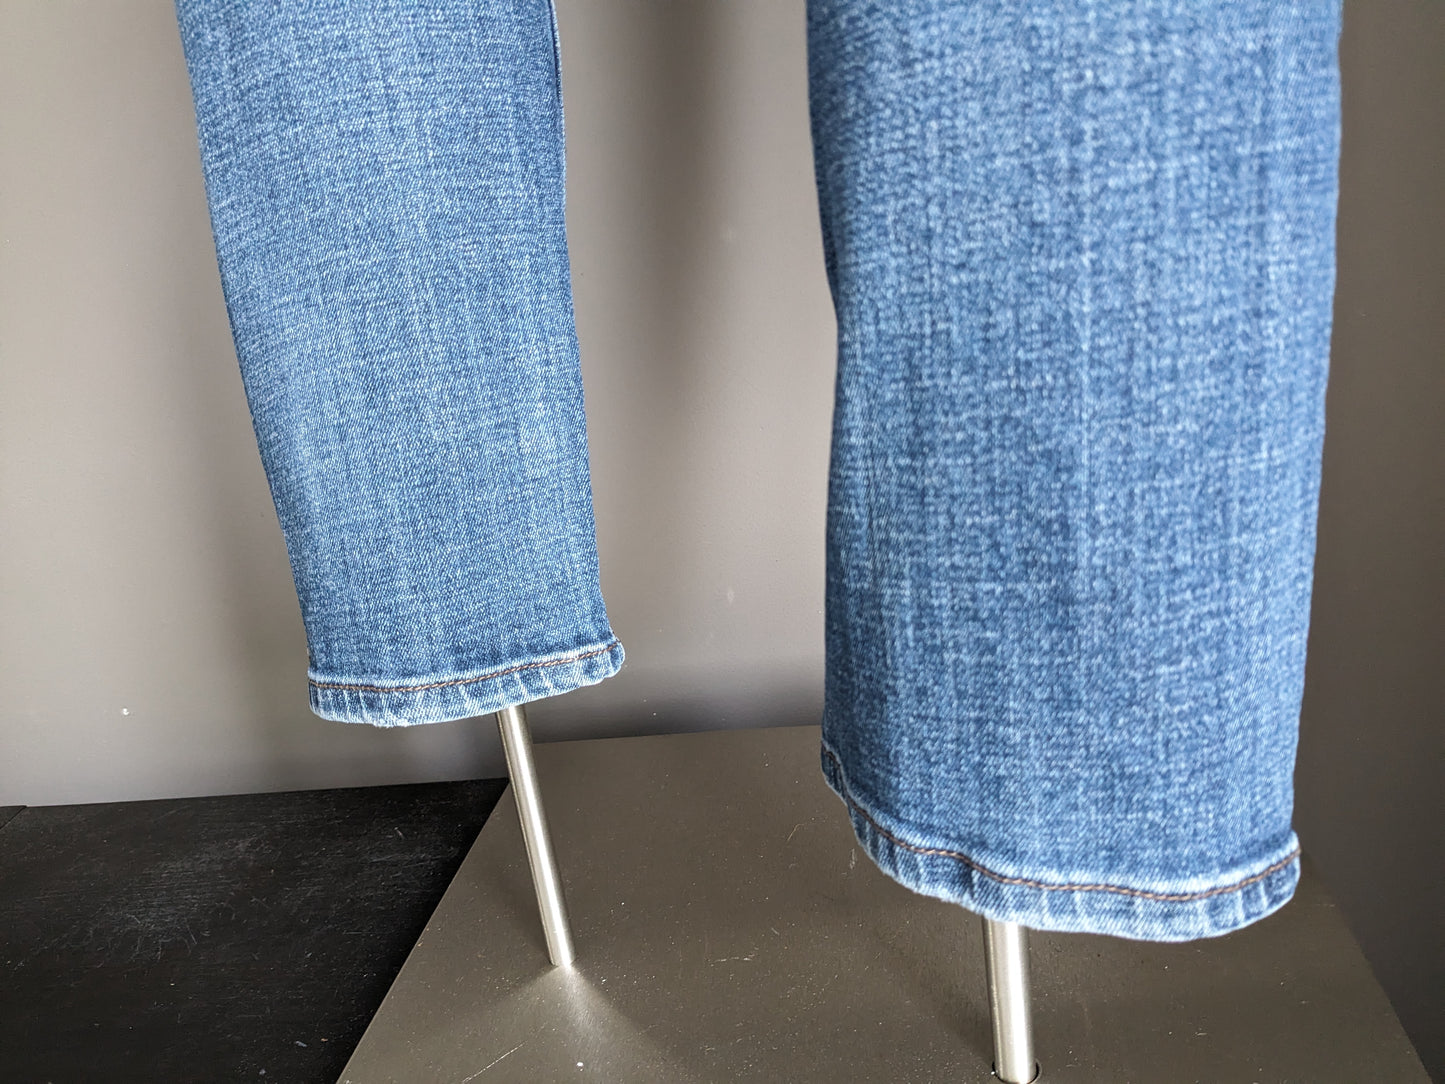 New Star Jeans. Couleur bleue. Taille W34 - L32. extensible.